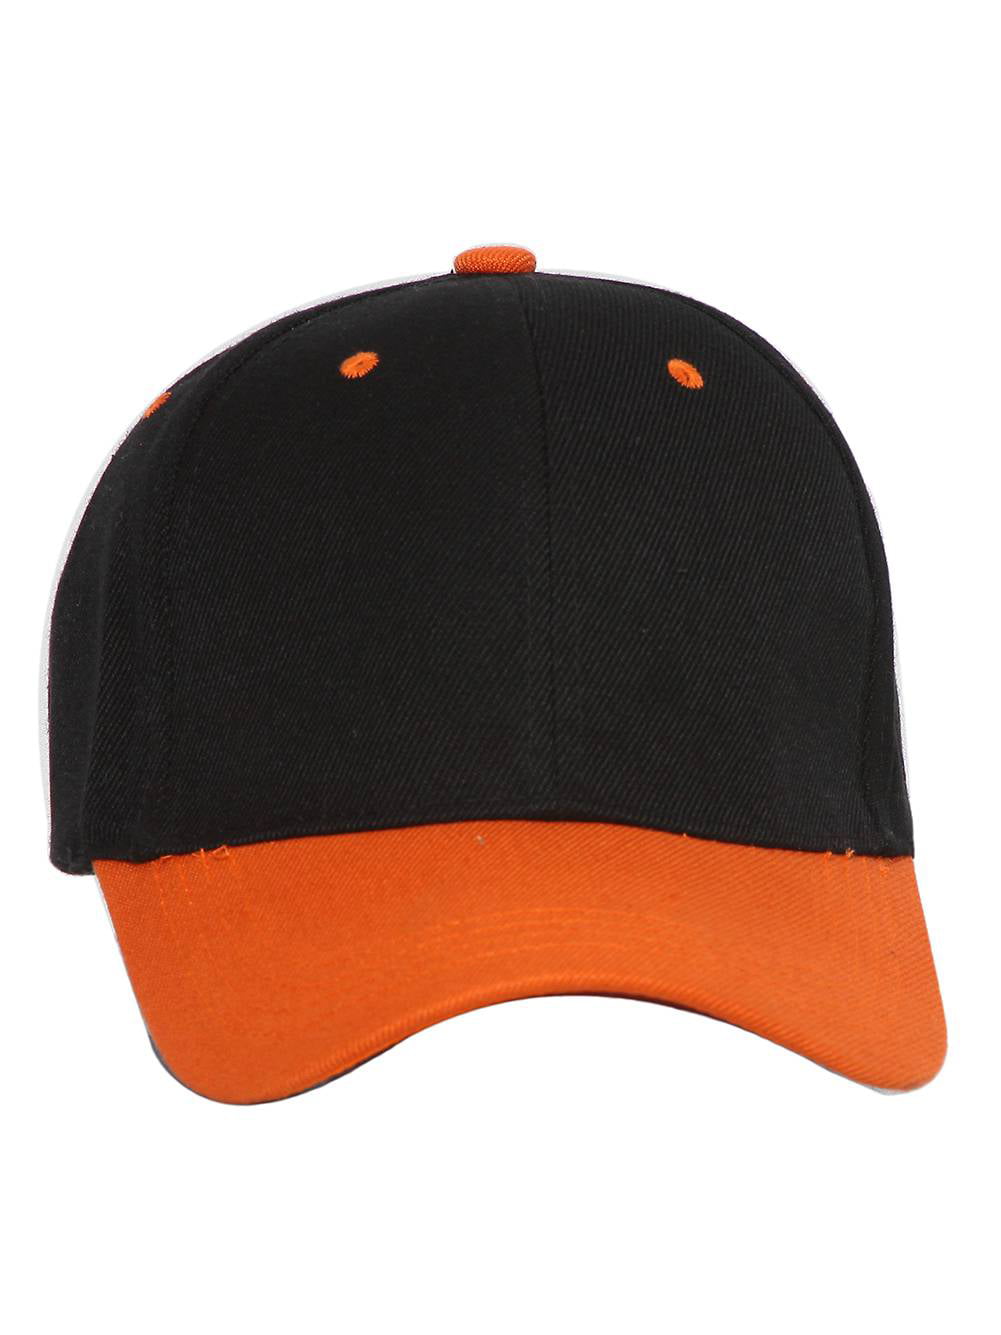 discount 67% WOMEN FASHION Accessories Hat and cap Orange Orange Single NoName hat and cap 